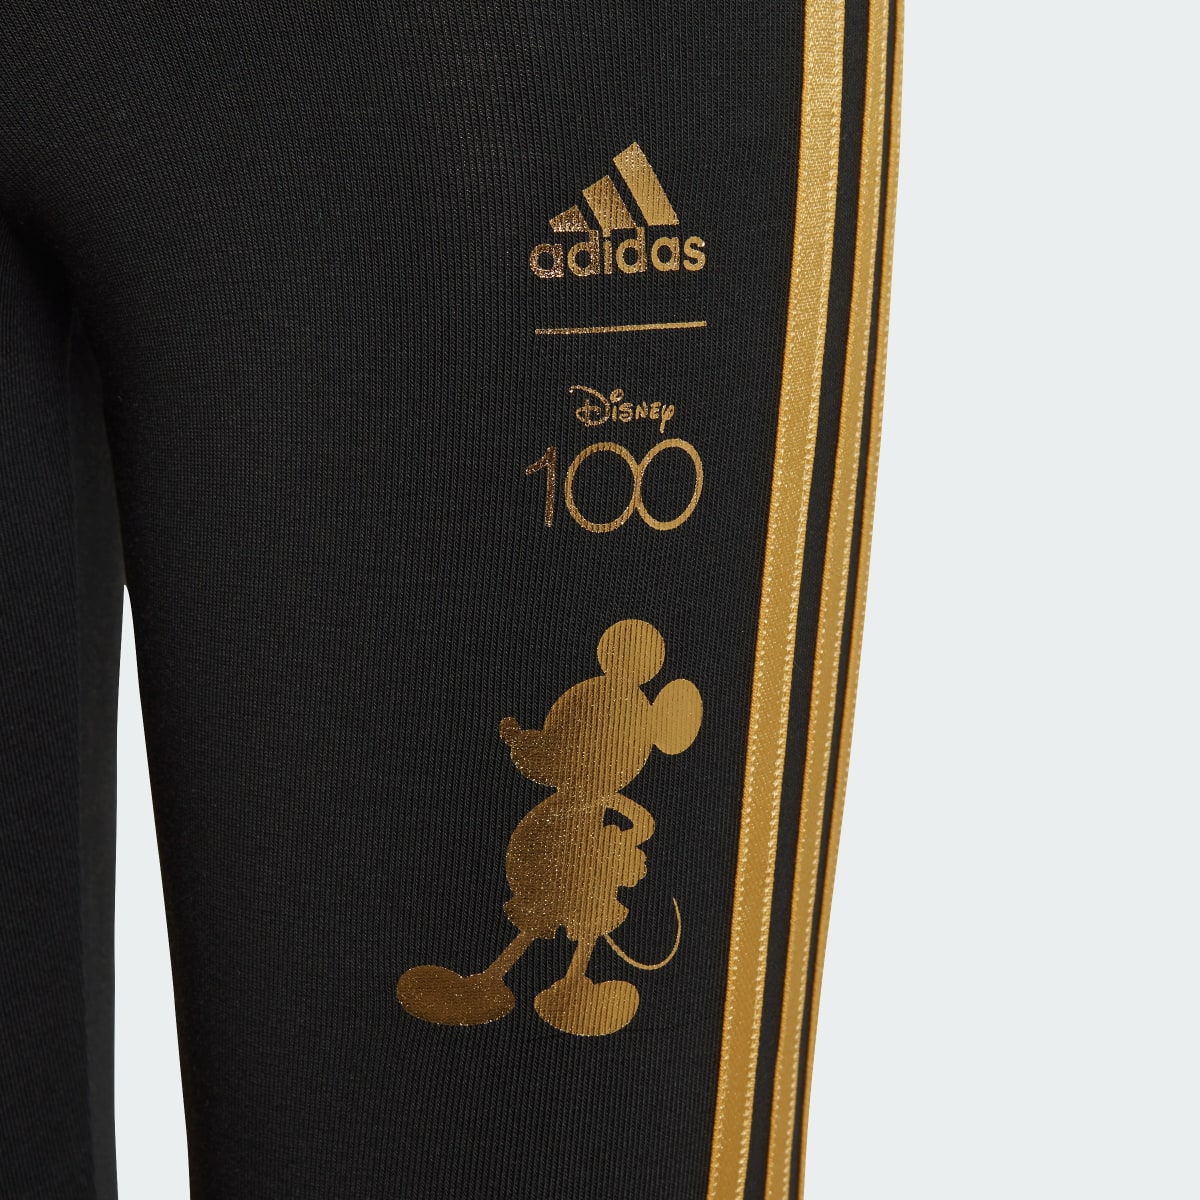 Adidas Licras adidas x Disney 100 Corte Medio. 6